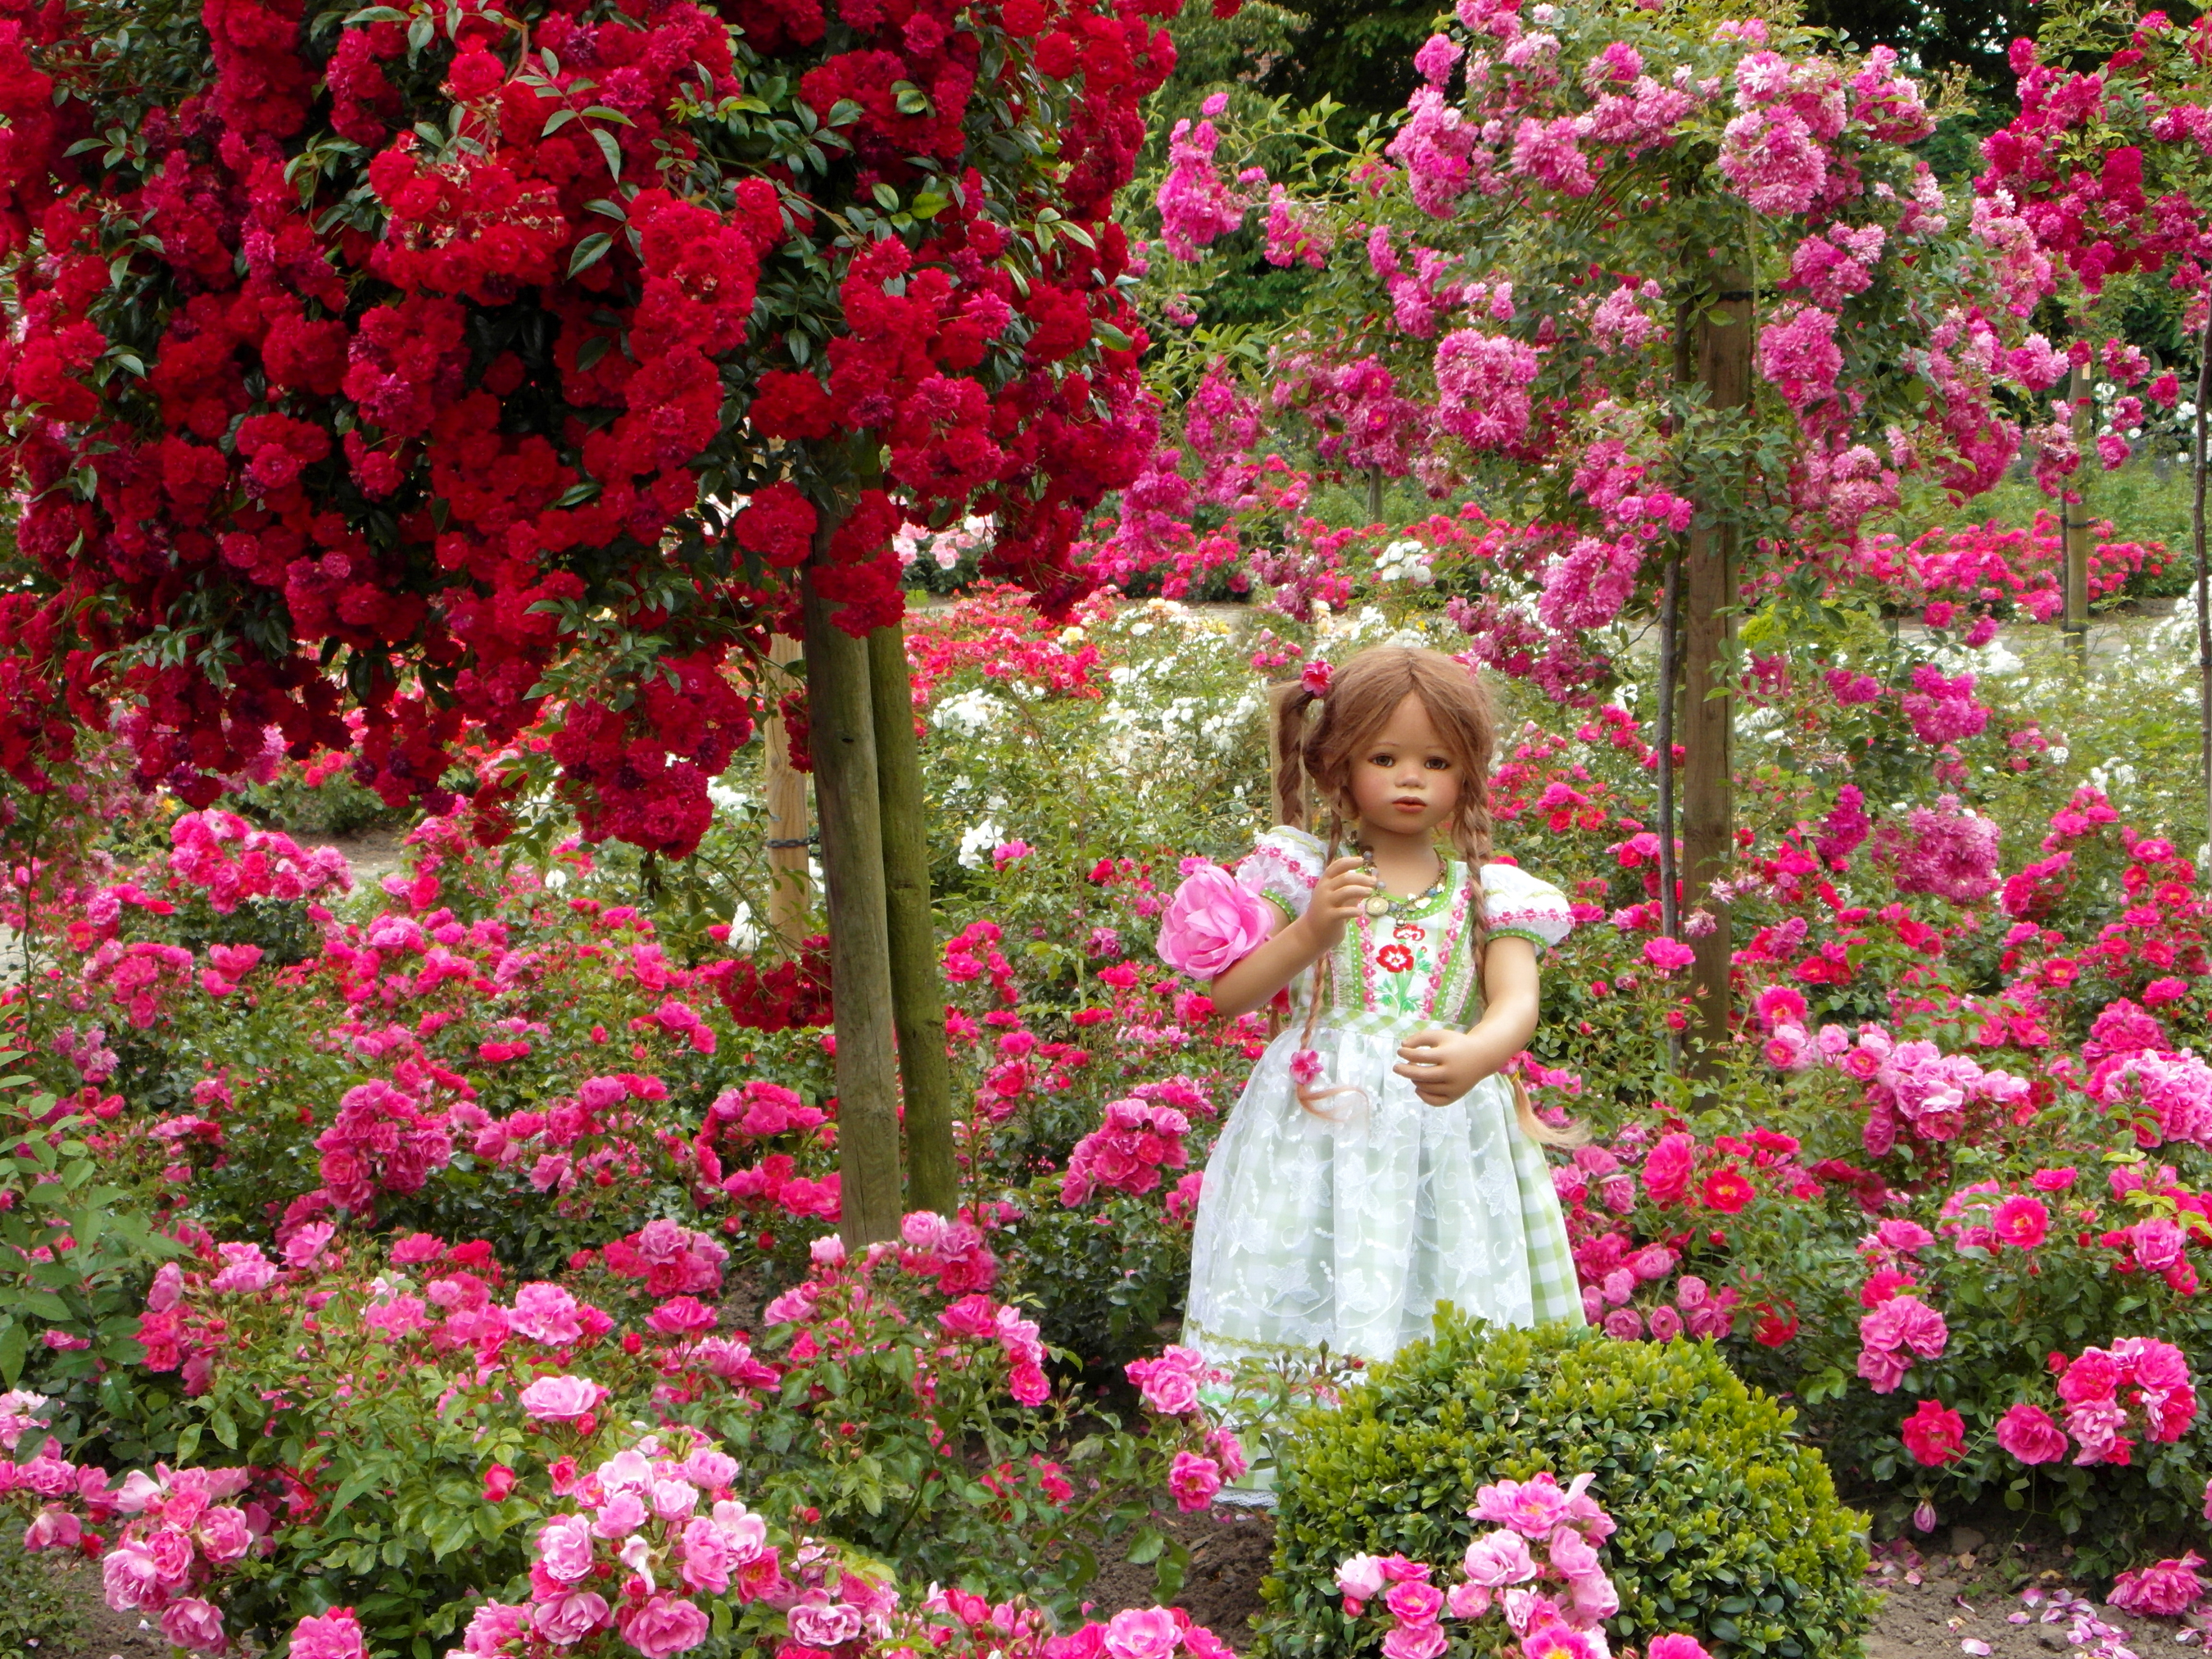 Видео сада с цветами. Розовый сад Баден-Баден Германия. Гюлистан-сад роз. Сад с цветами.